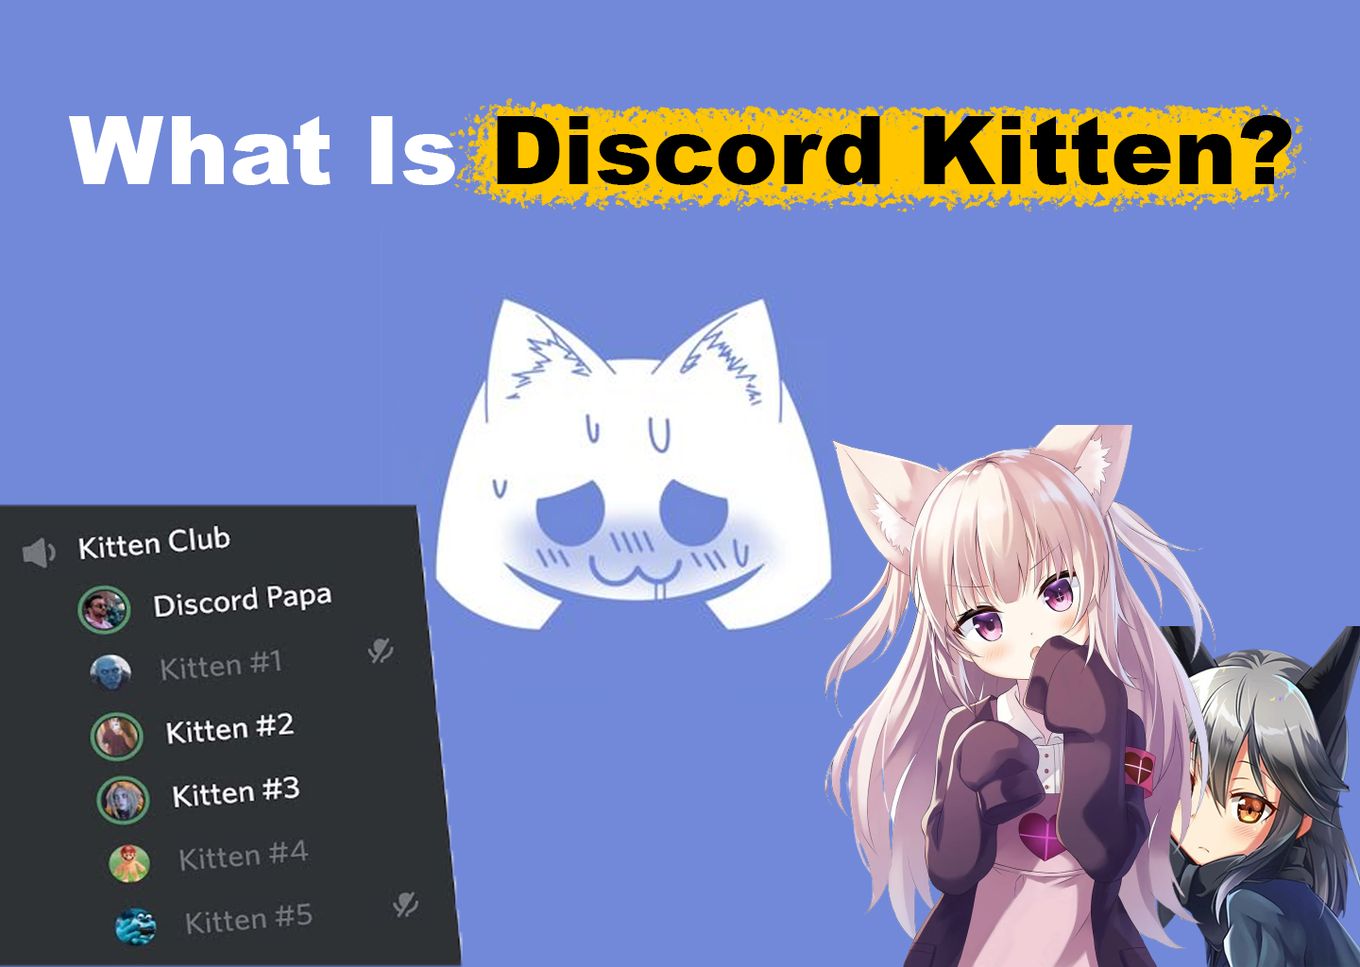 Discord Kitten Explained [What They Are & What They Do] - Alvaro Trigo ...